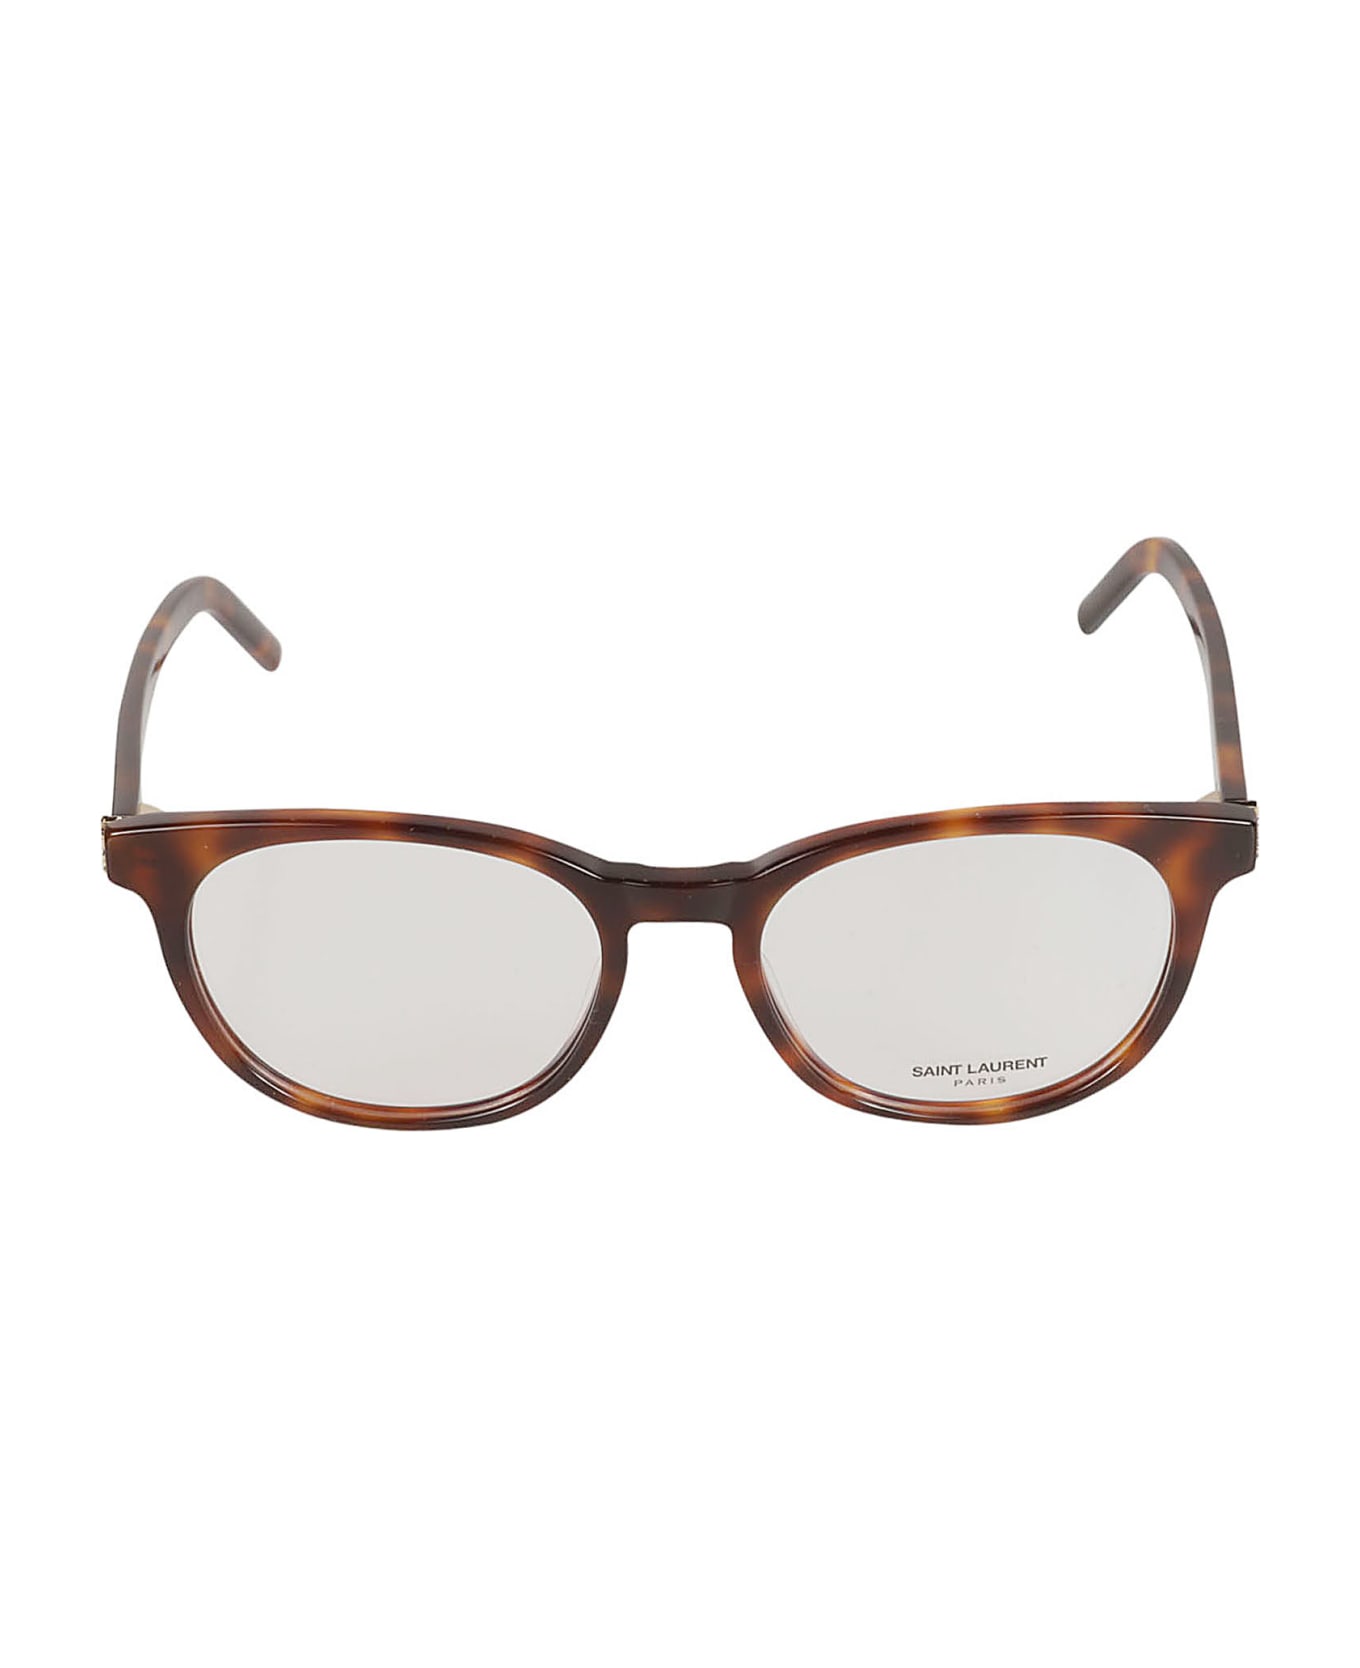 Saint Laurent Eyewear Ysl Hinge Oval Frame Glasses - Havana/Transparent